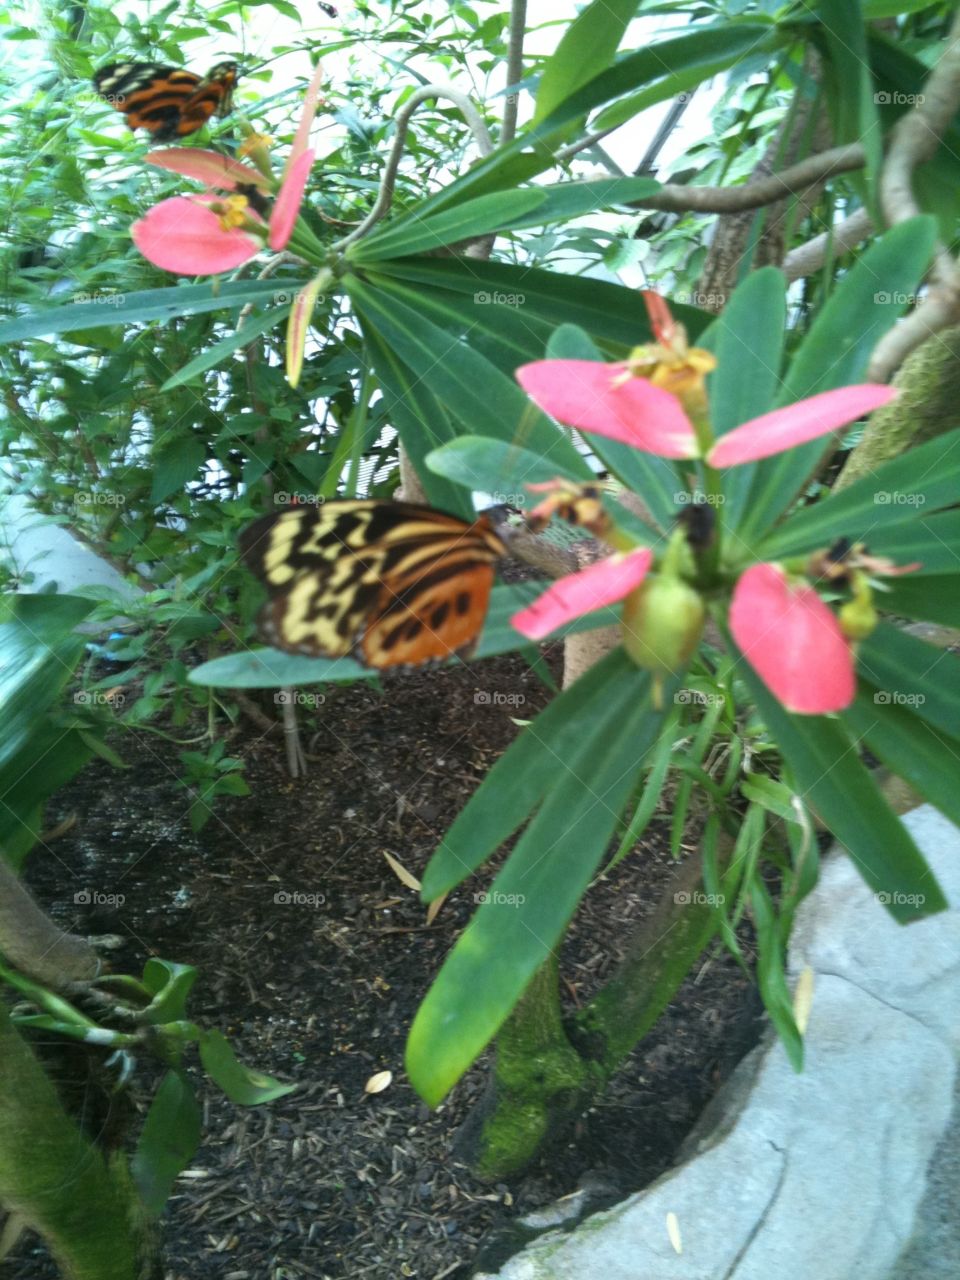 Butterflies on flowers. Butterflies!!!!